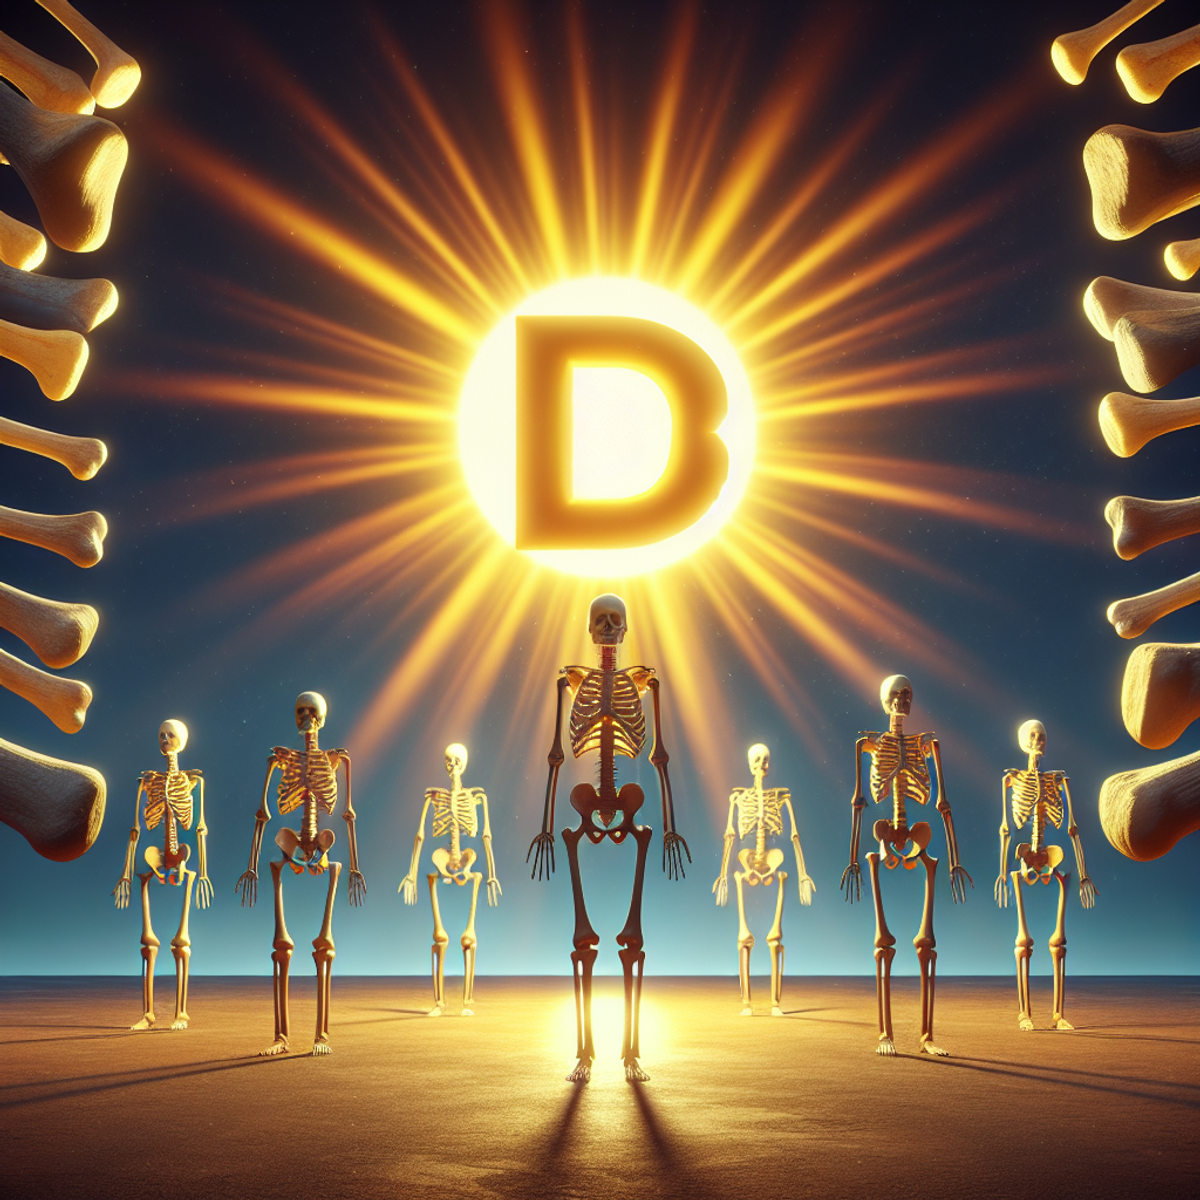 A Sun Shines on a D3 Symbol, Emitting Rays Towards Healthy Human Bones.